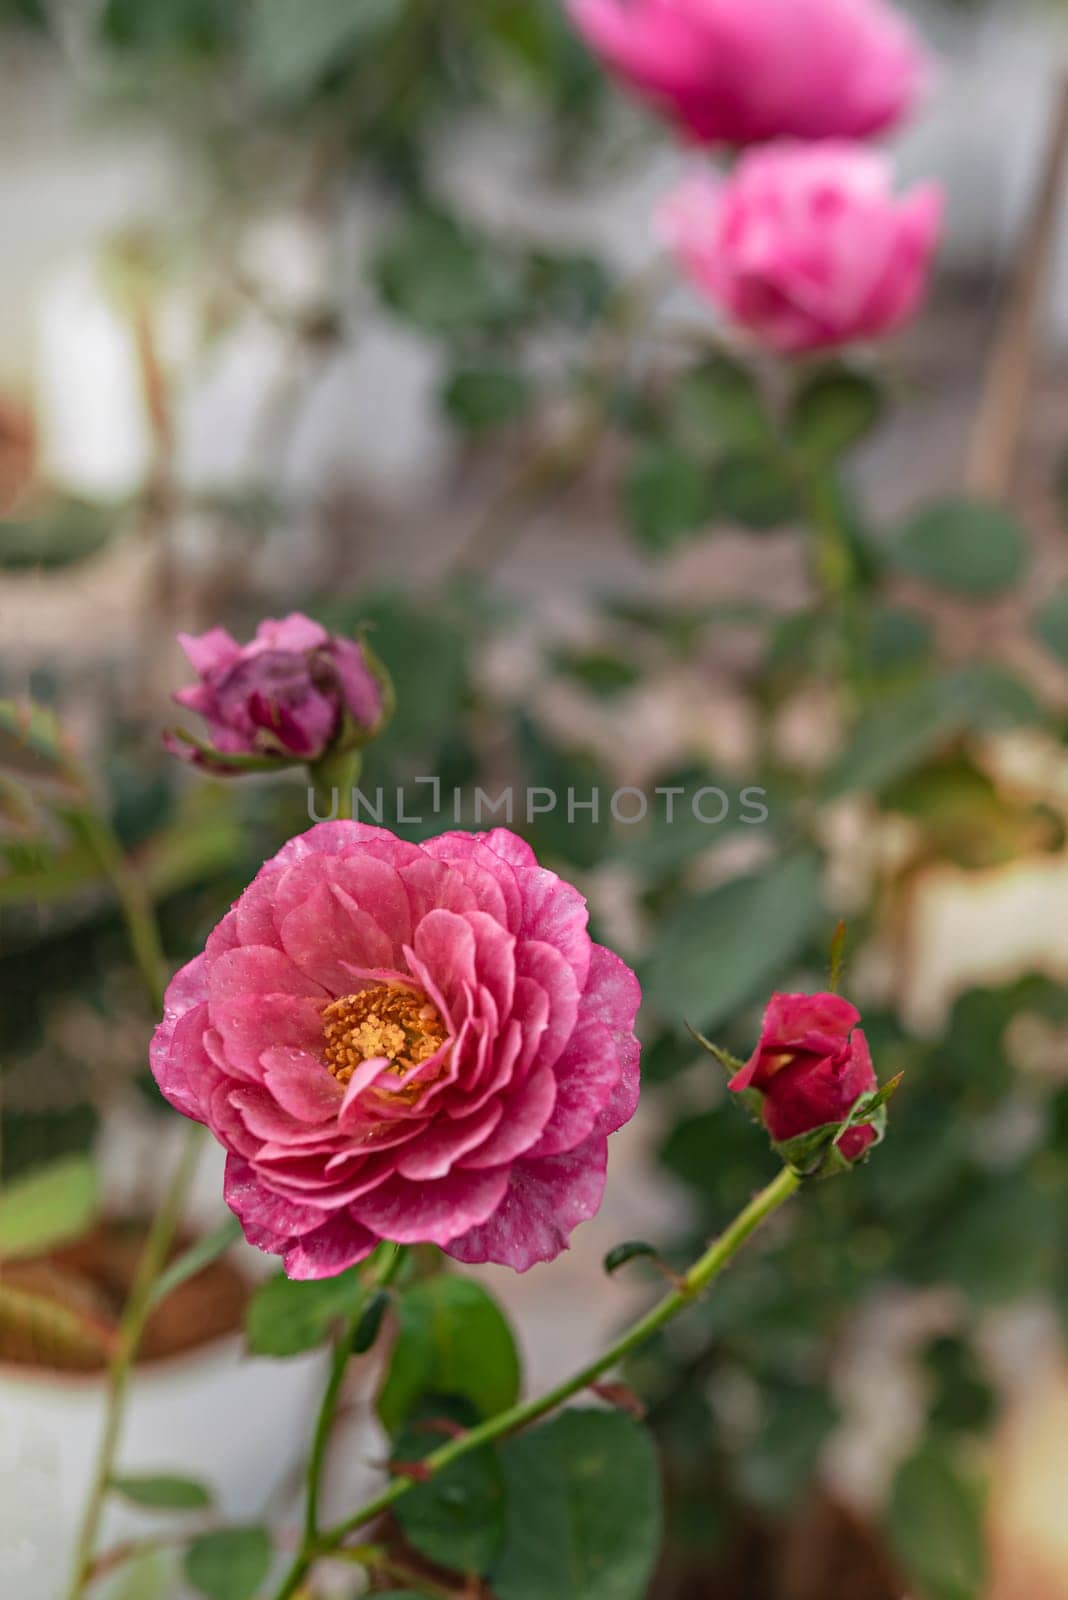 Close up of beautiful fresh pink rose flower in green garden